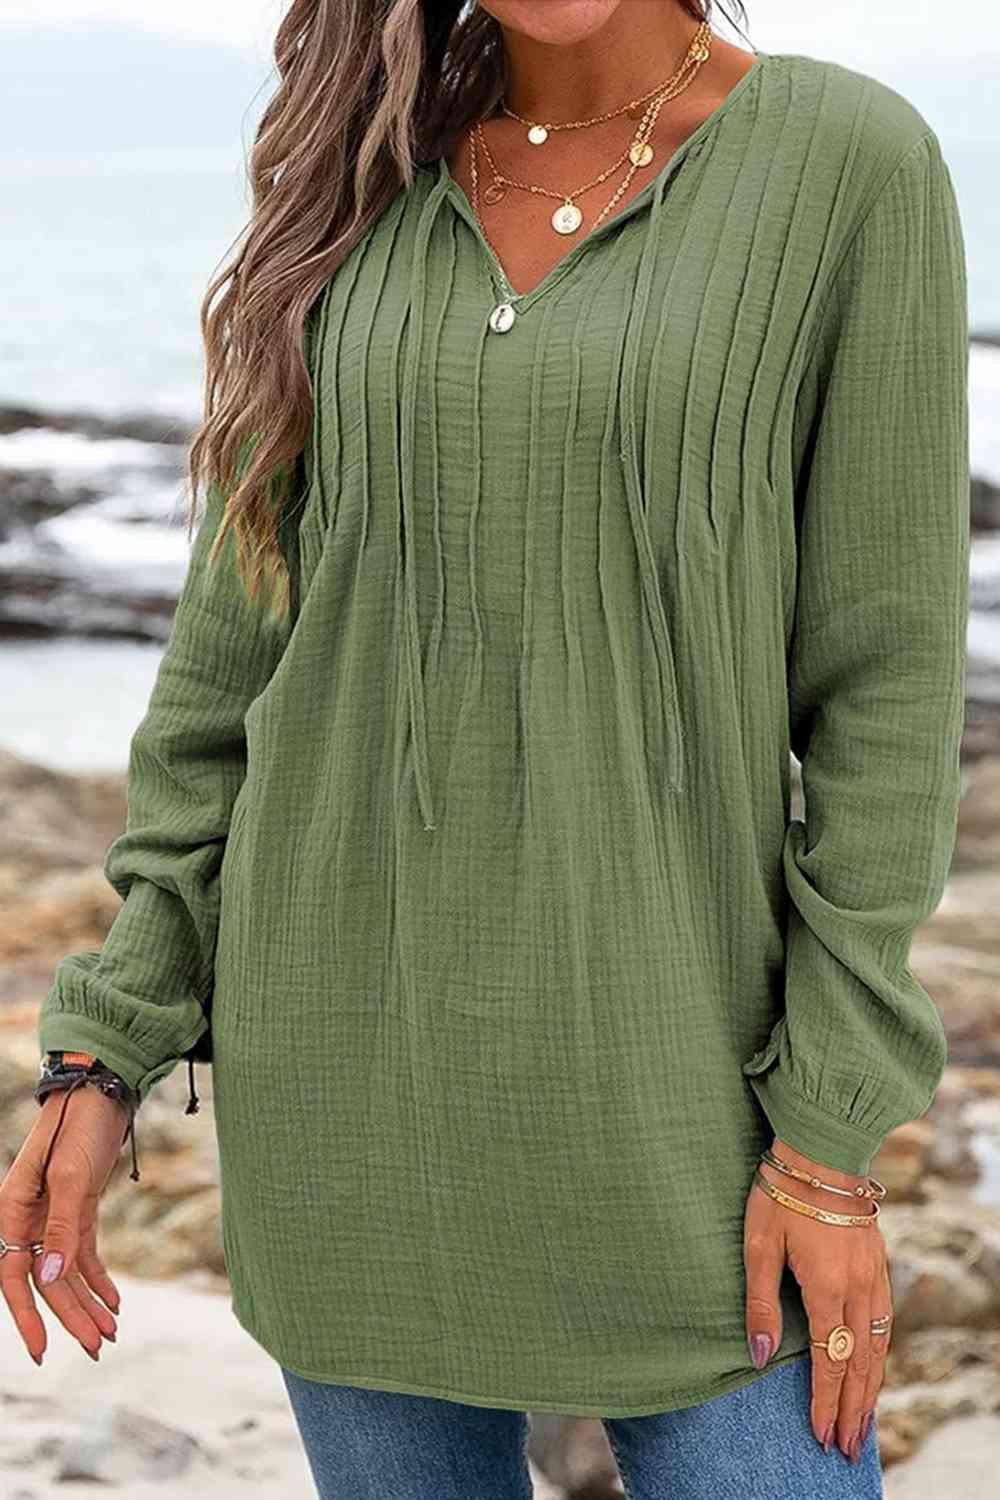 a woman standing on a beach wearing a green top